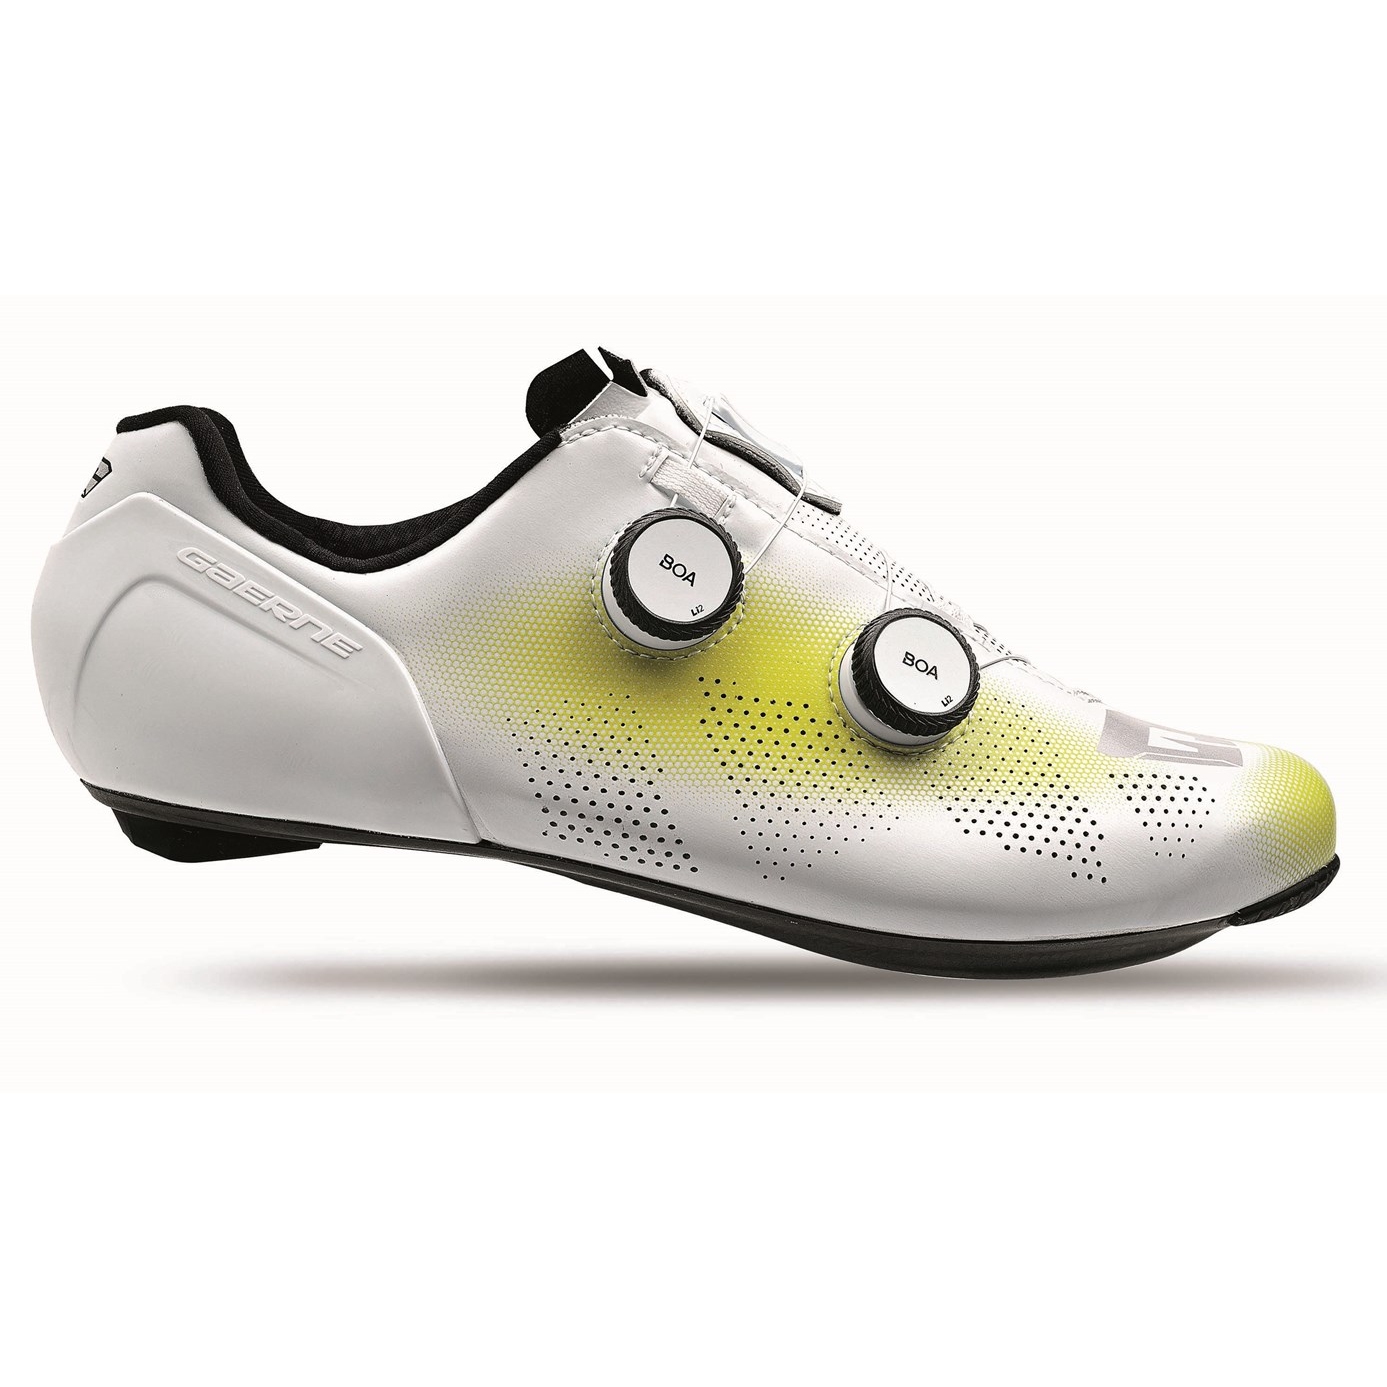 Productfoto van Gaerne Carbon G.STL Racefietsschoenen - Light Flo Yellow White